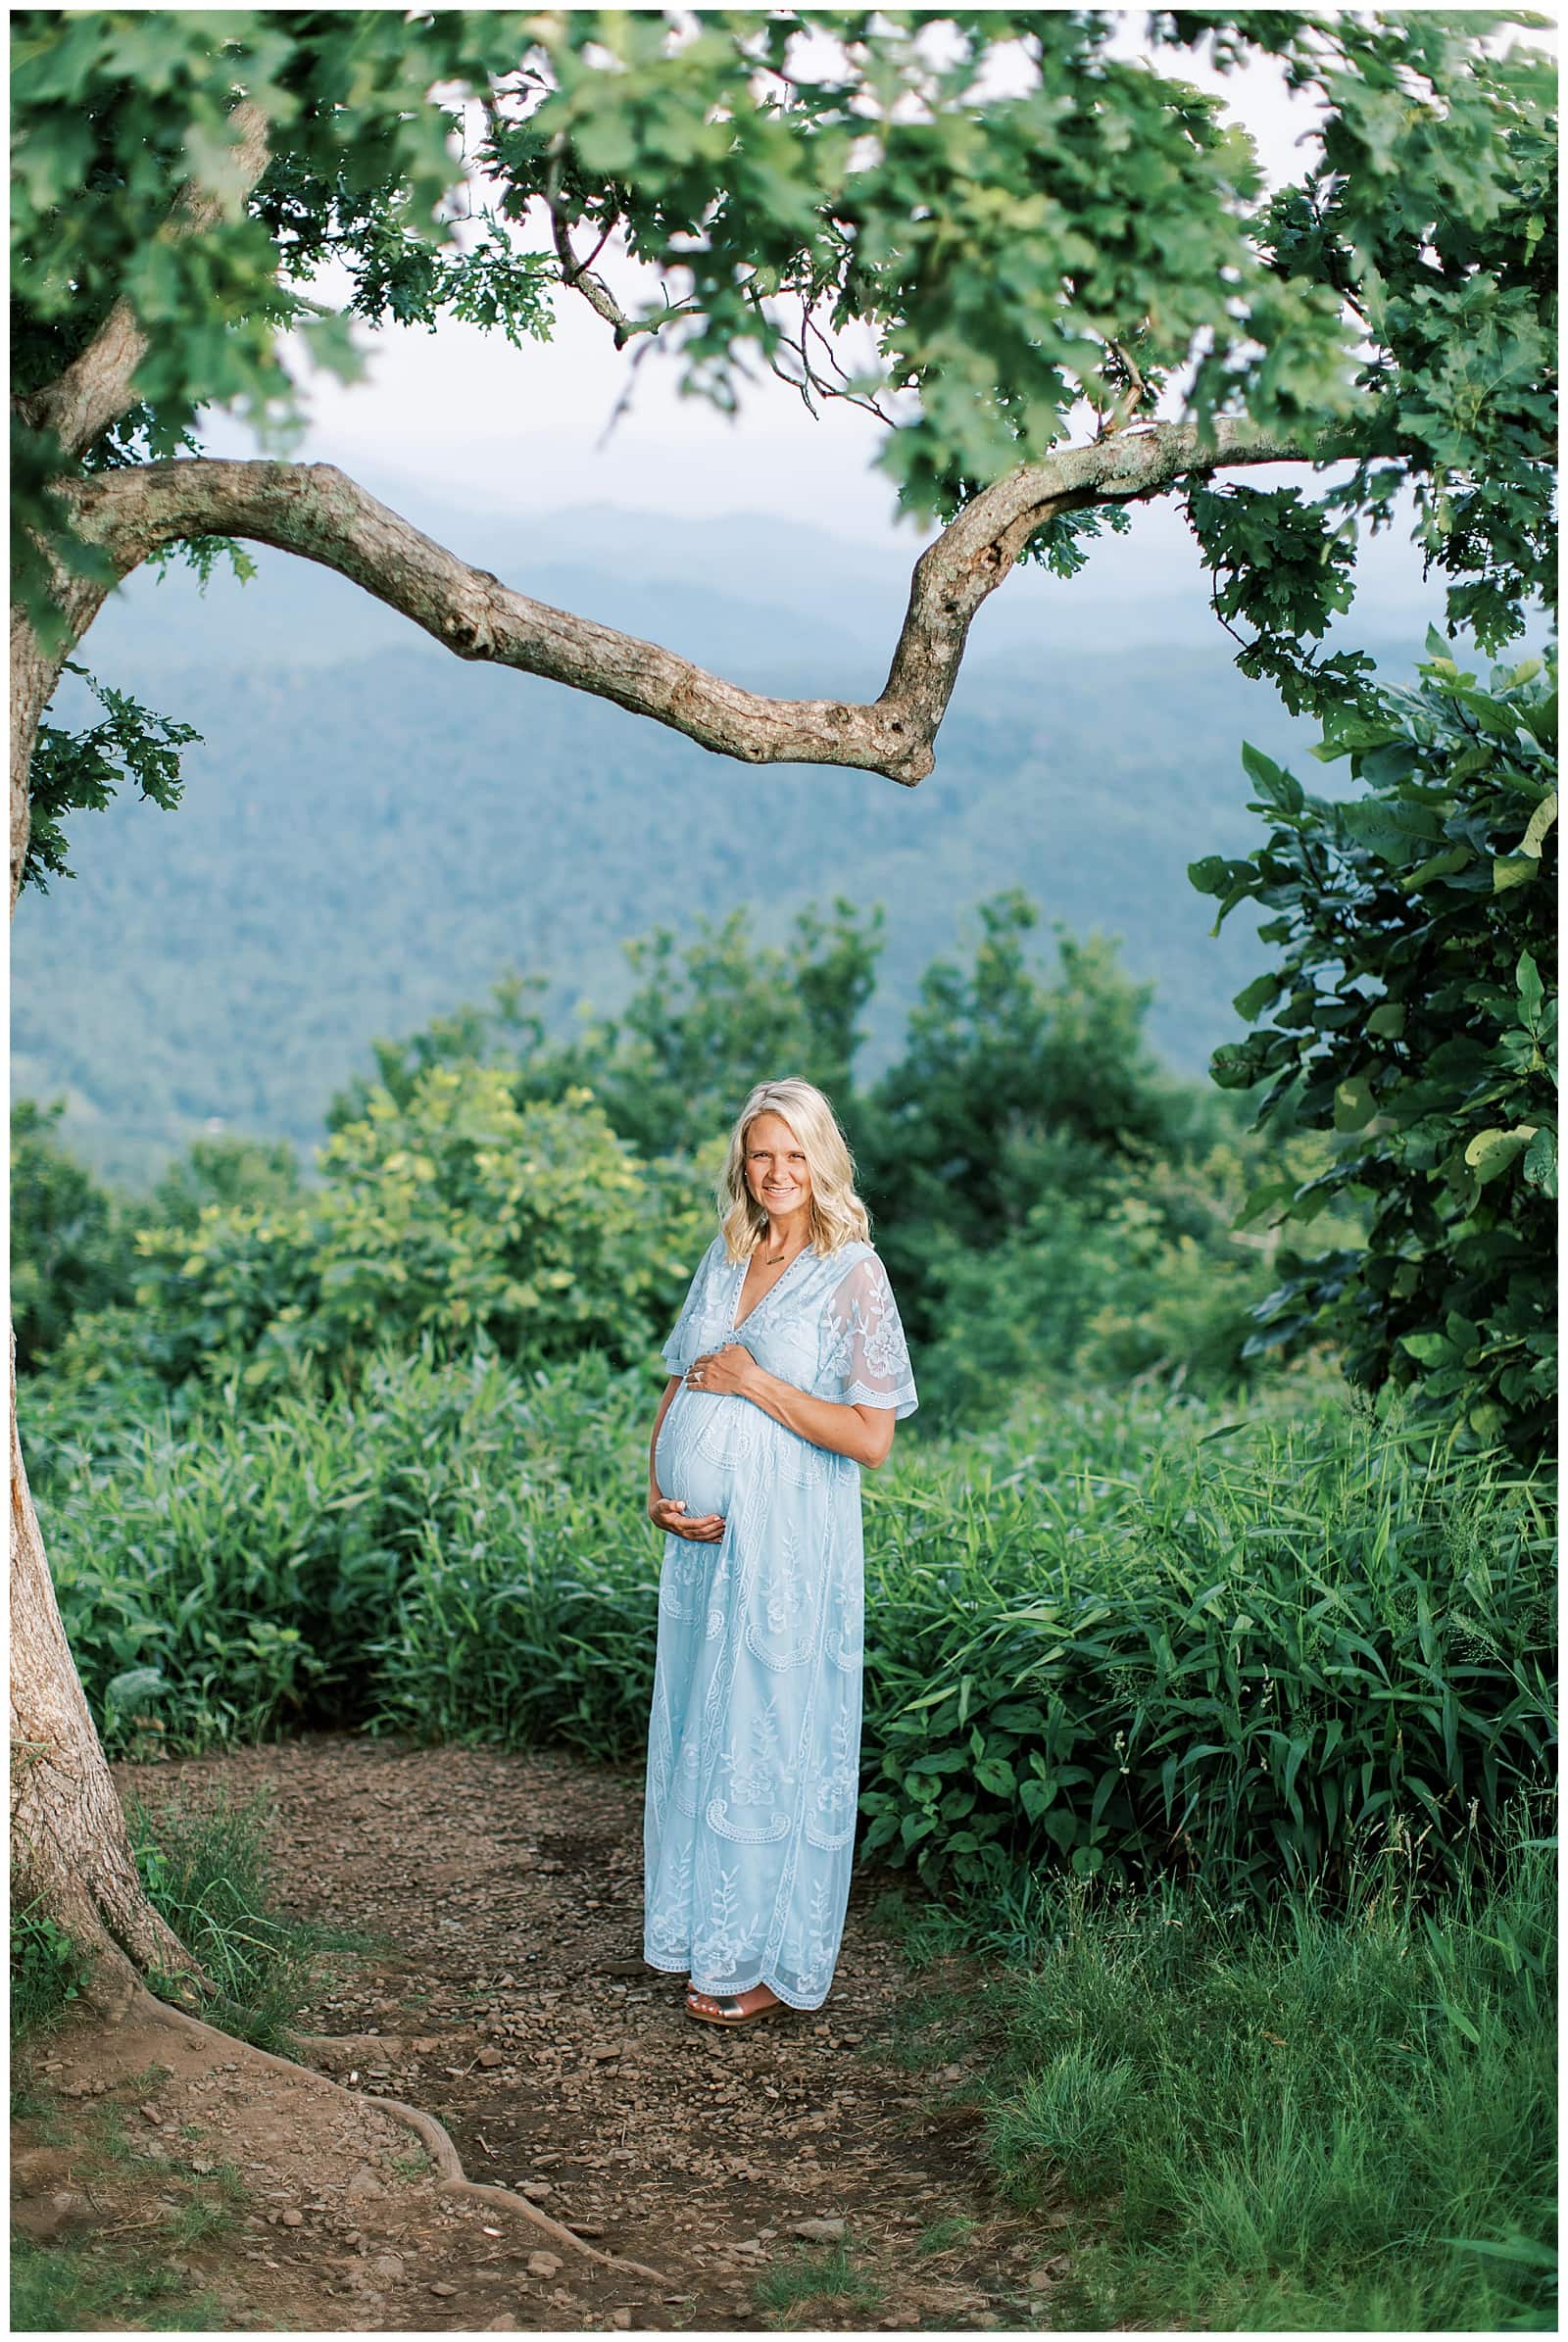 Danielle-Defayette-Photography-The-Beauty-Spot-Maternity-Photos-2020_0003.jpg